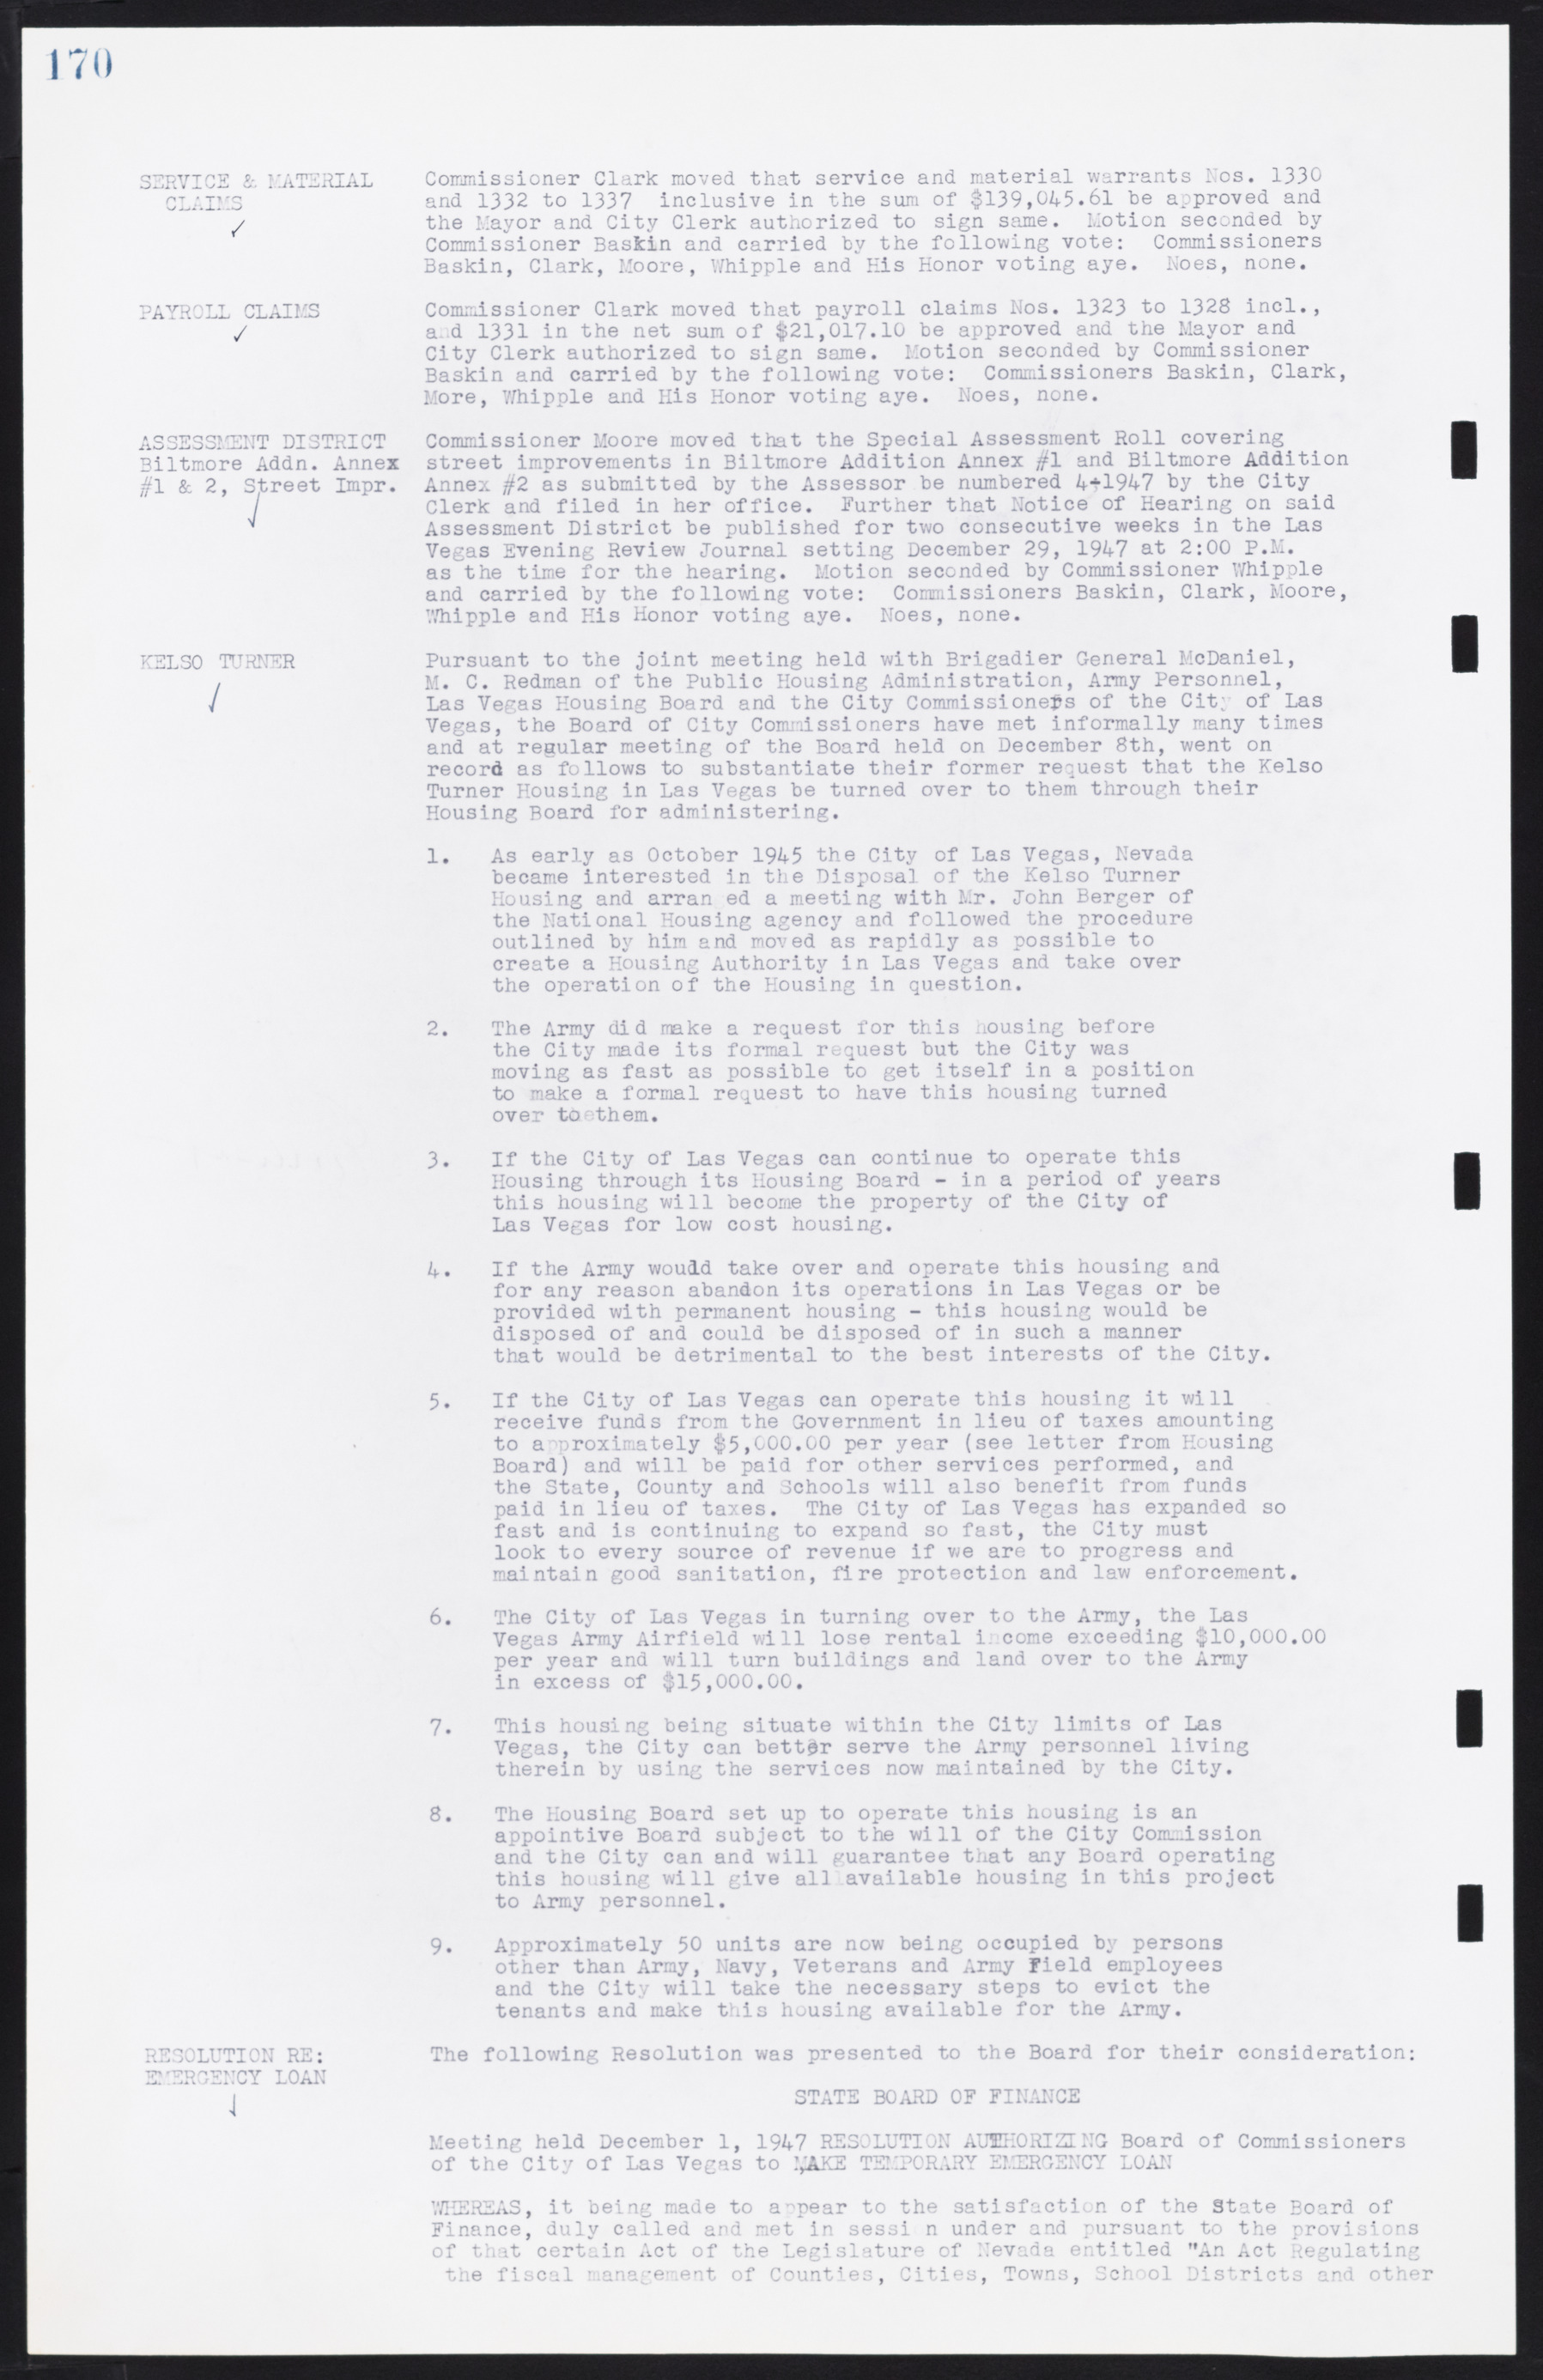 Las Vegas City Commission Minutes, January 7, 1947 to October 26, 1949, lvc000006-190